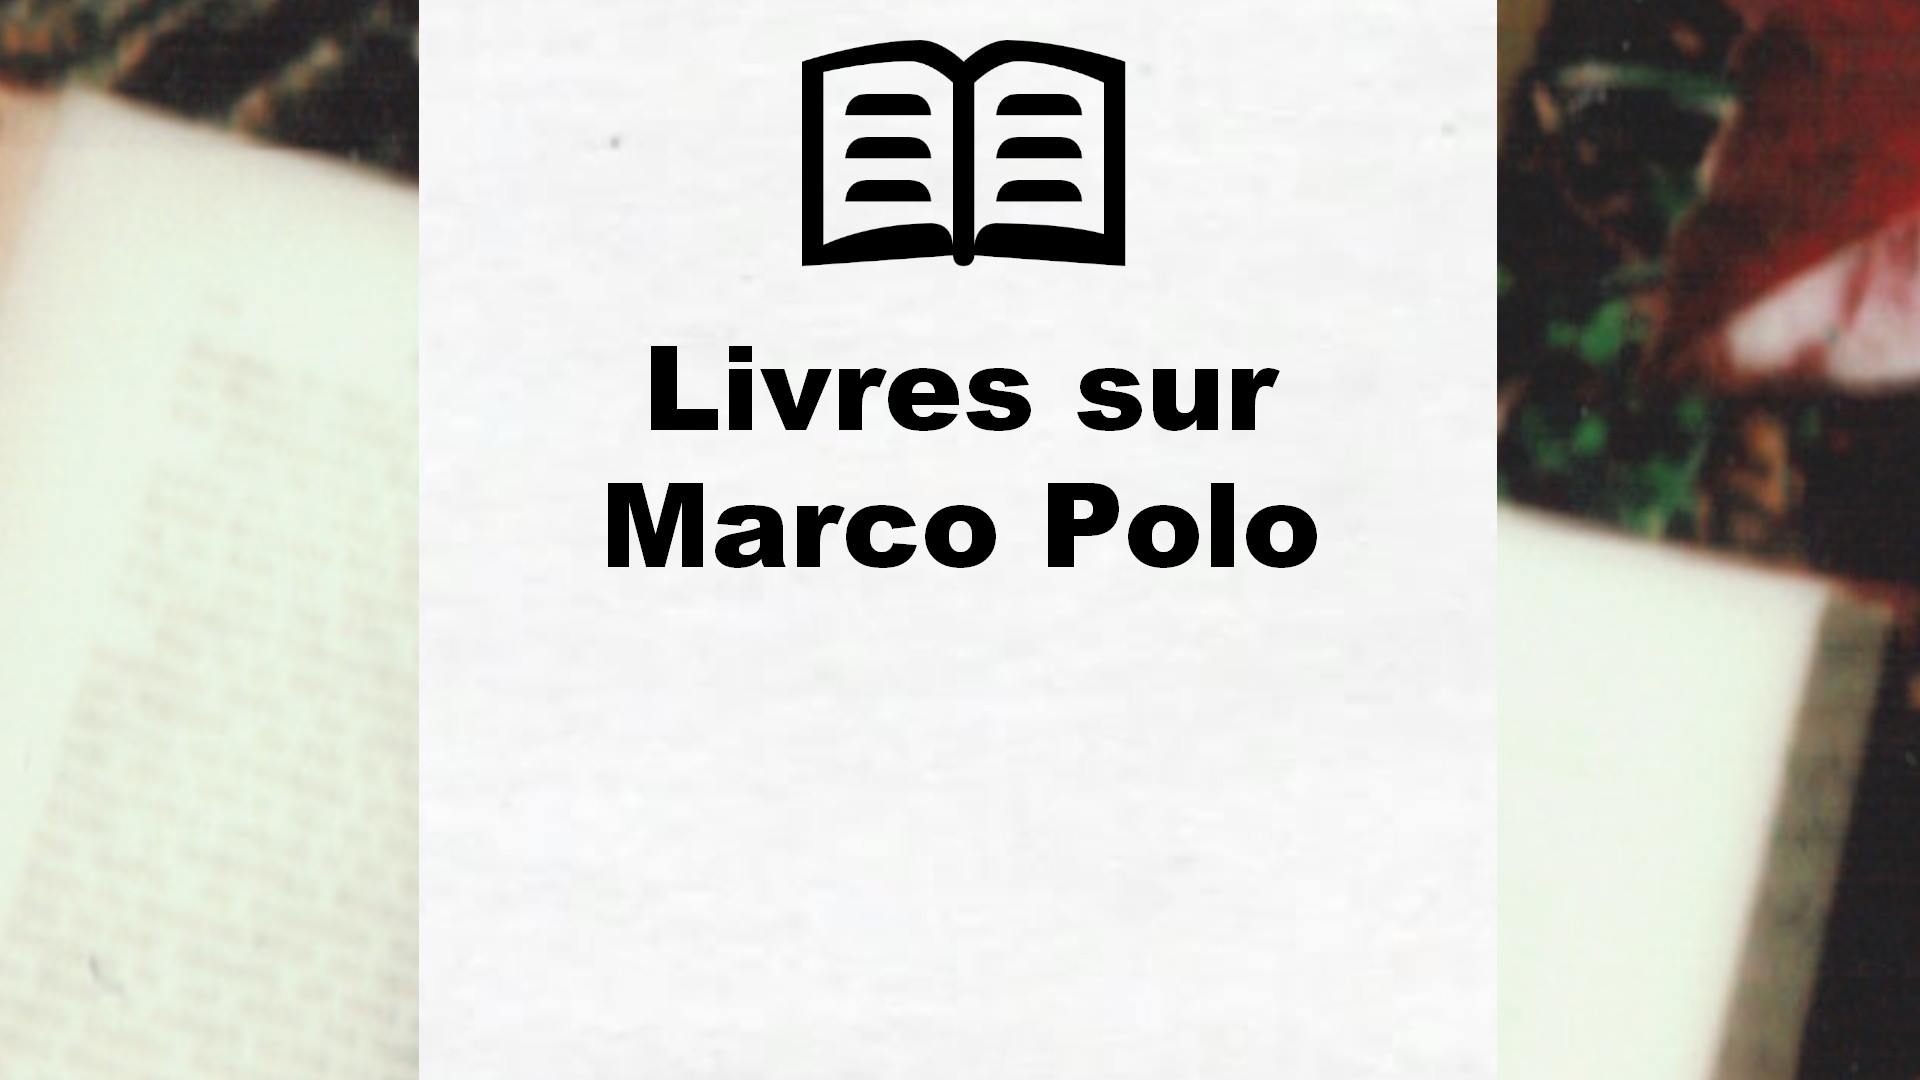 Livres sur Marco Polo